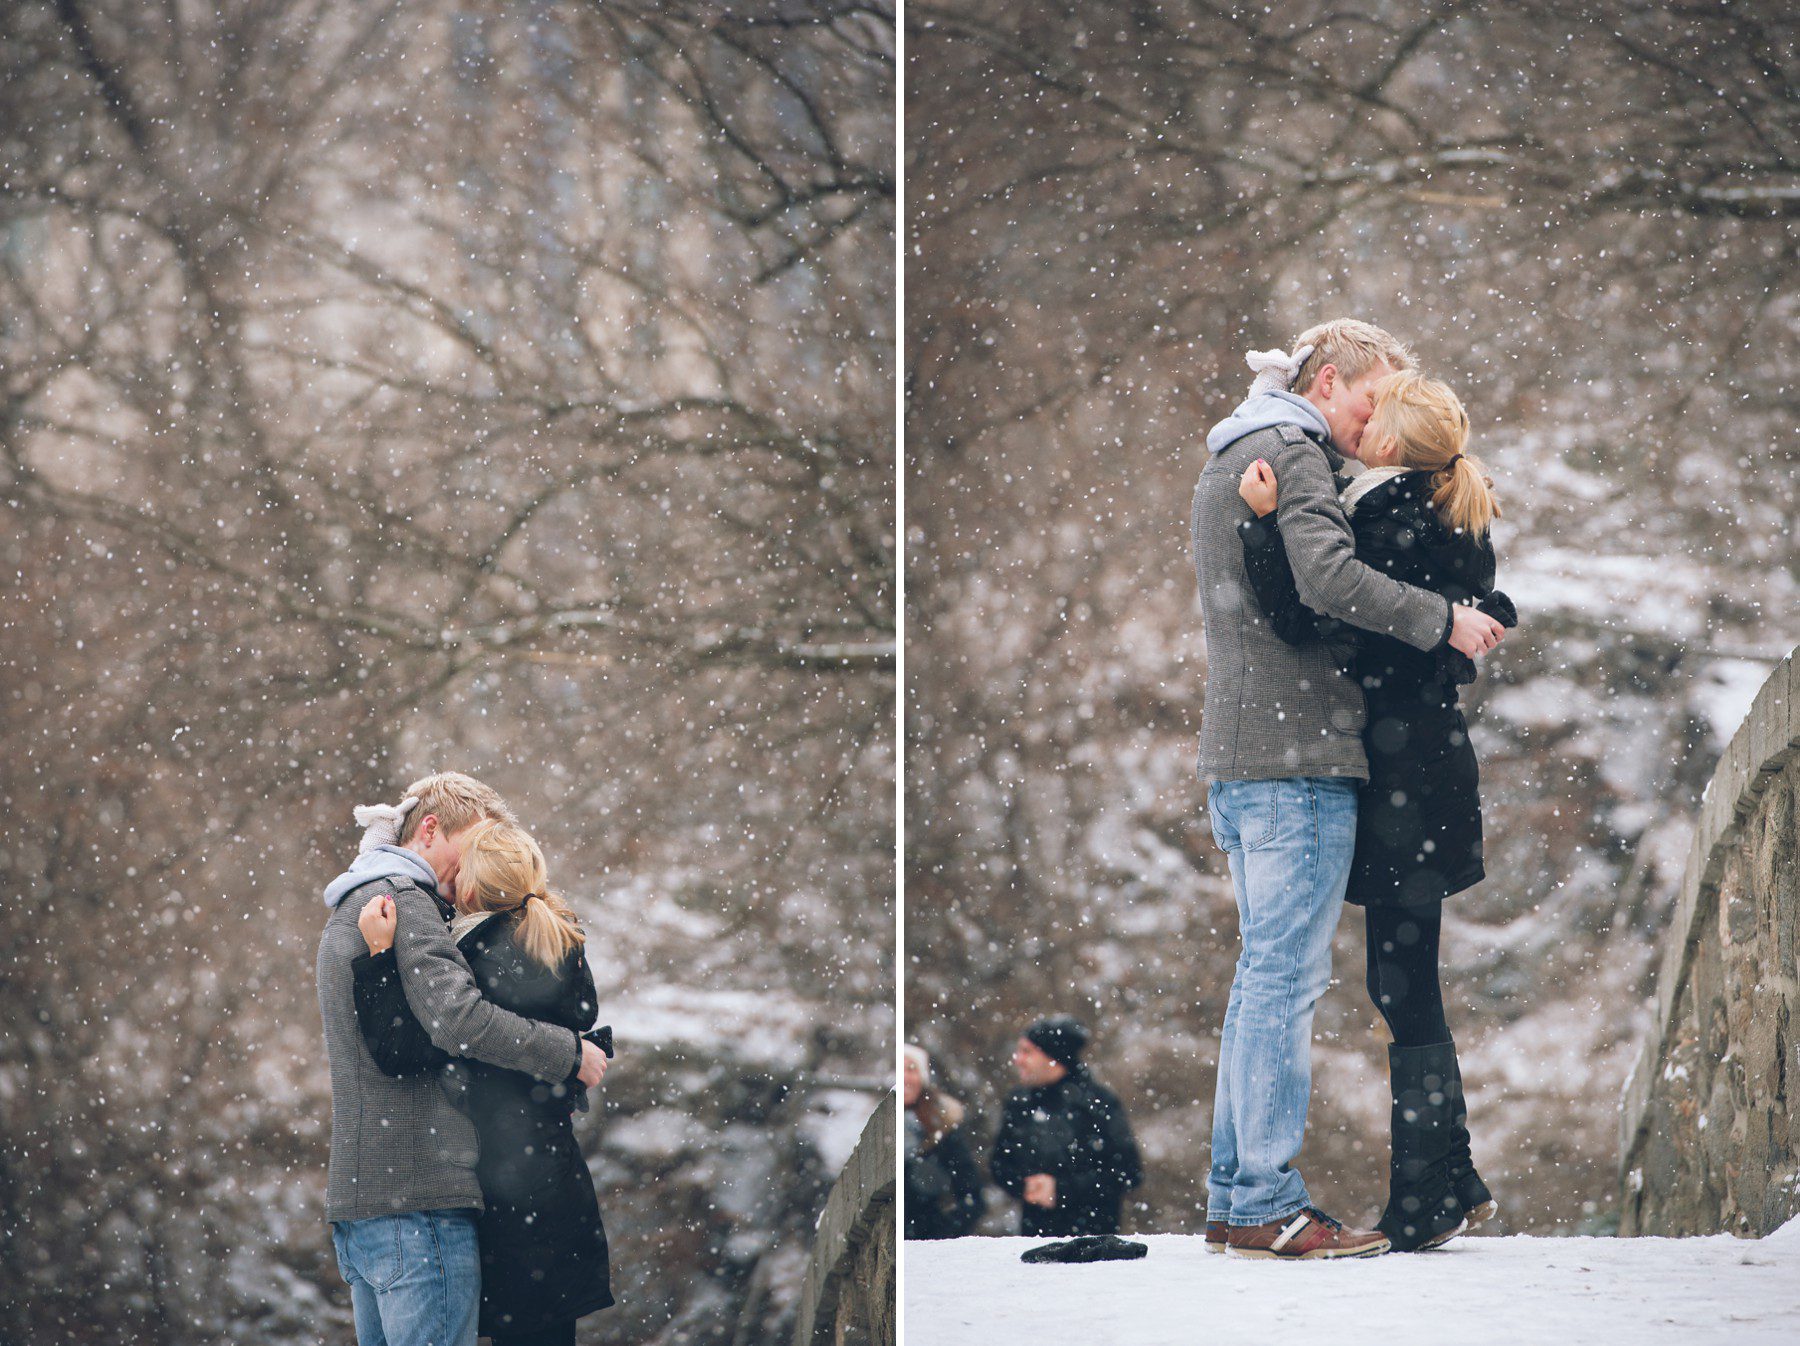 surprise proposal heiratsantrag hochzeitsantrag central park new york